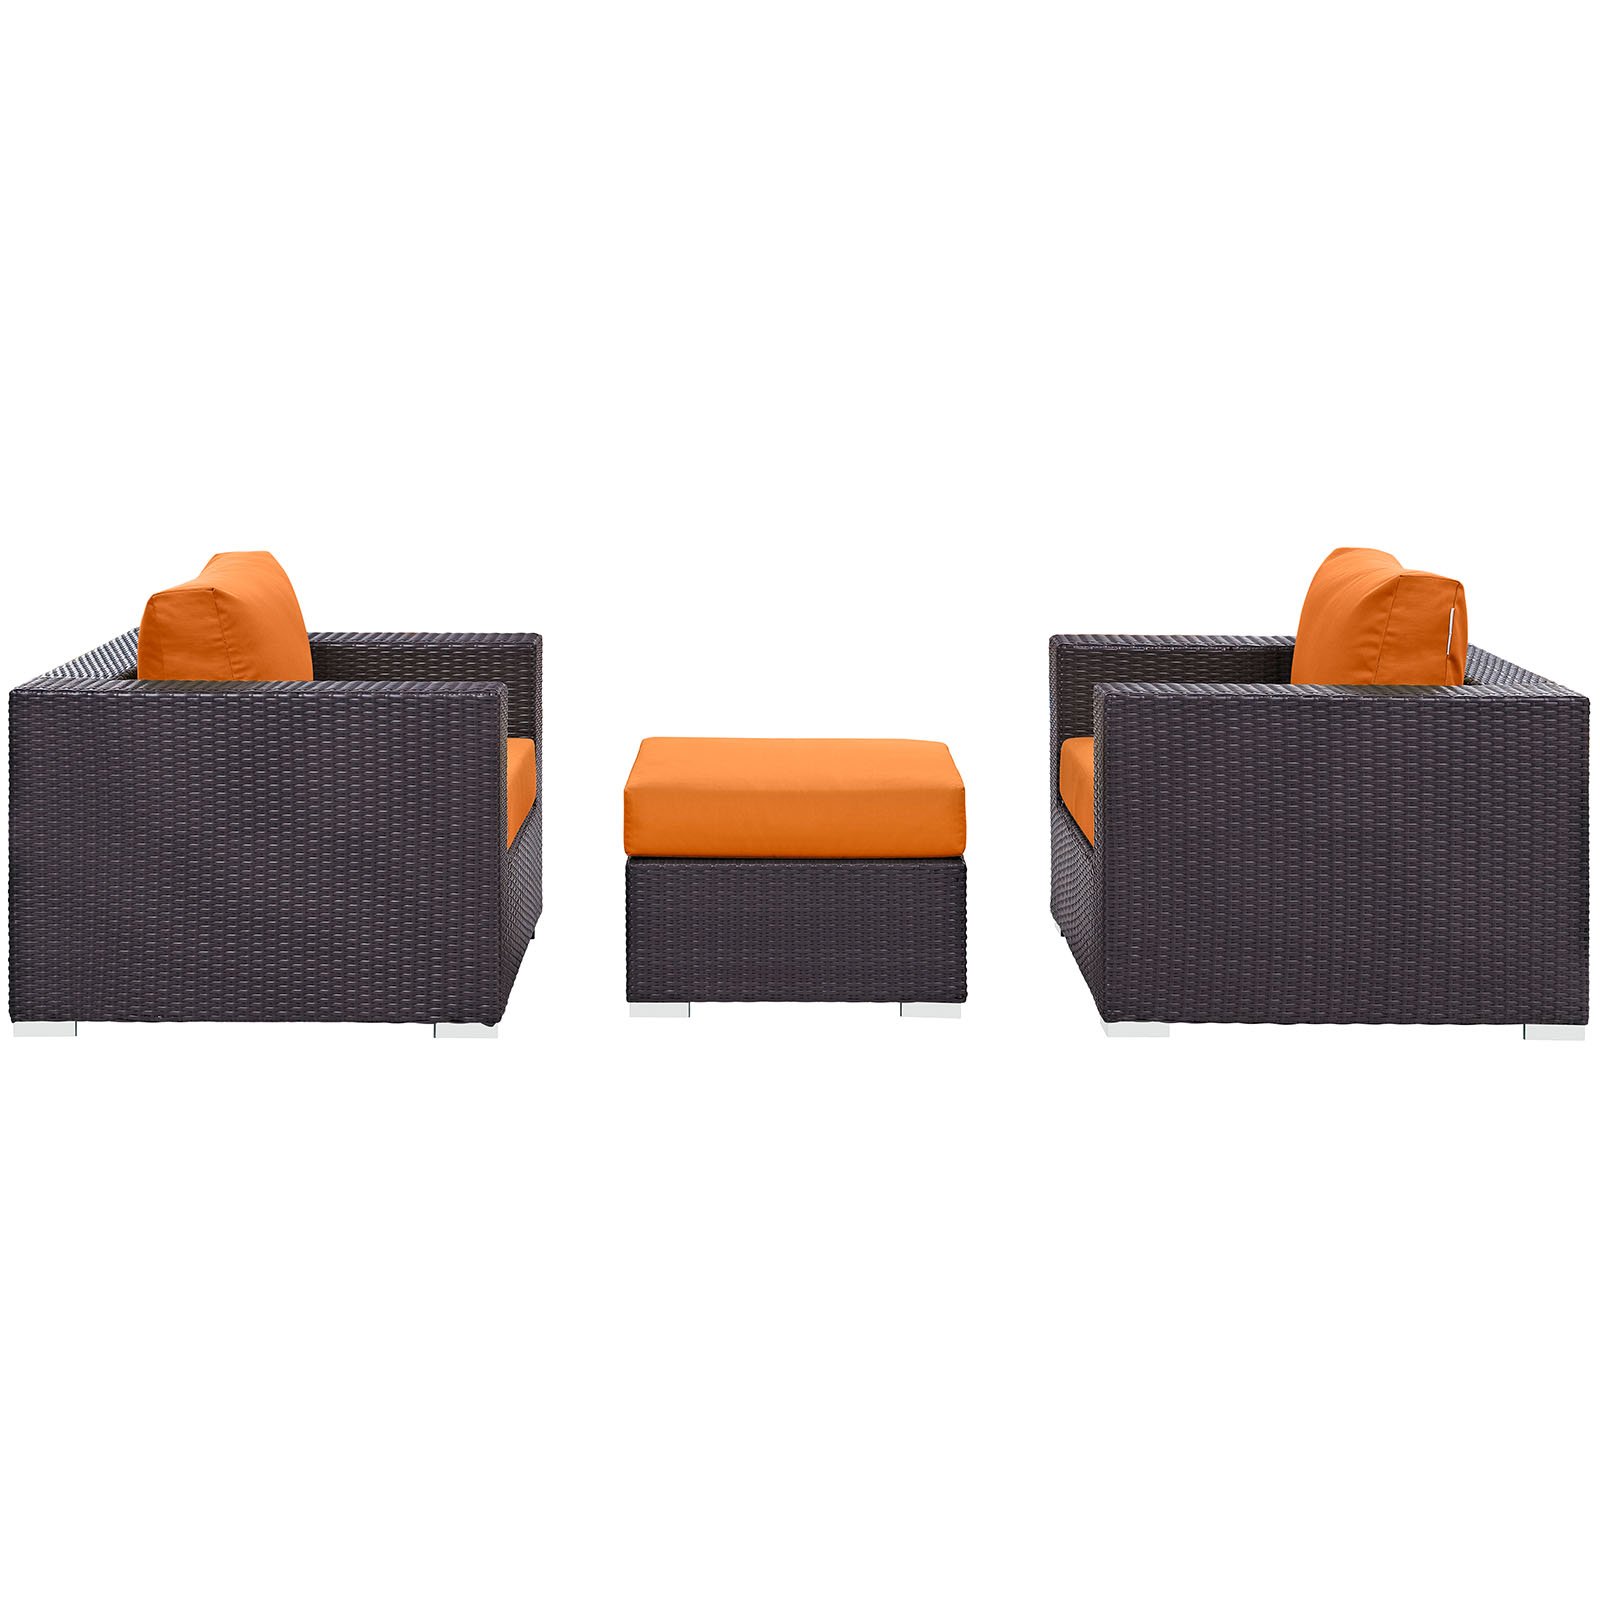 Modway Convene Wicker Rattan 3-Piece Outdoor Patio Furniture Set in Espresso Orange